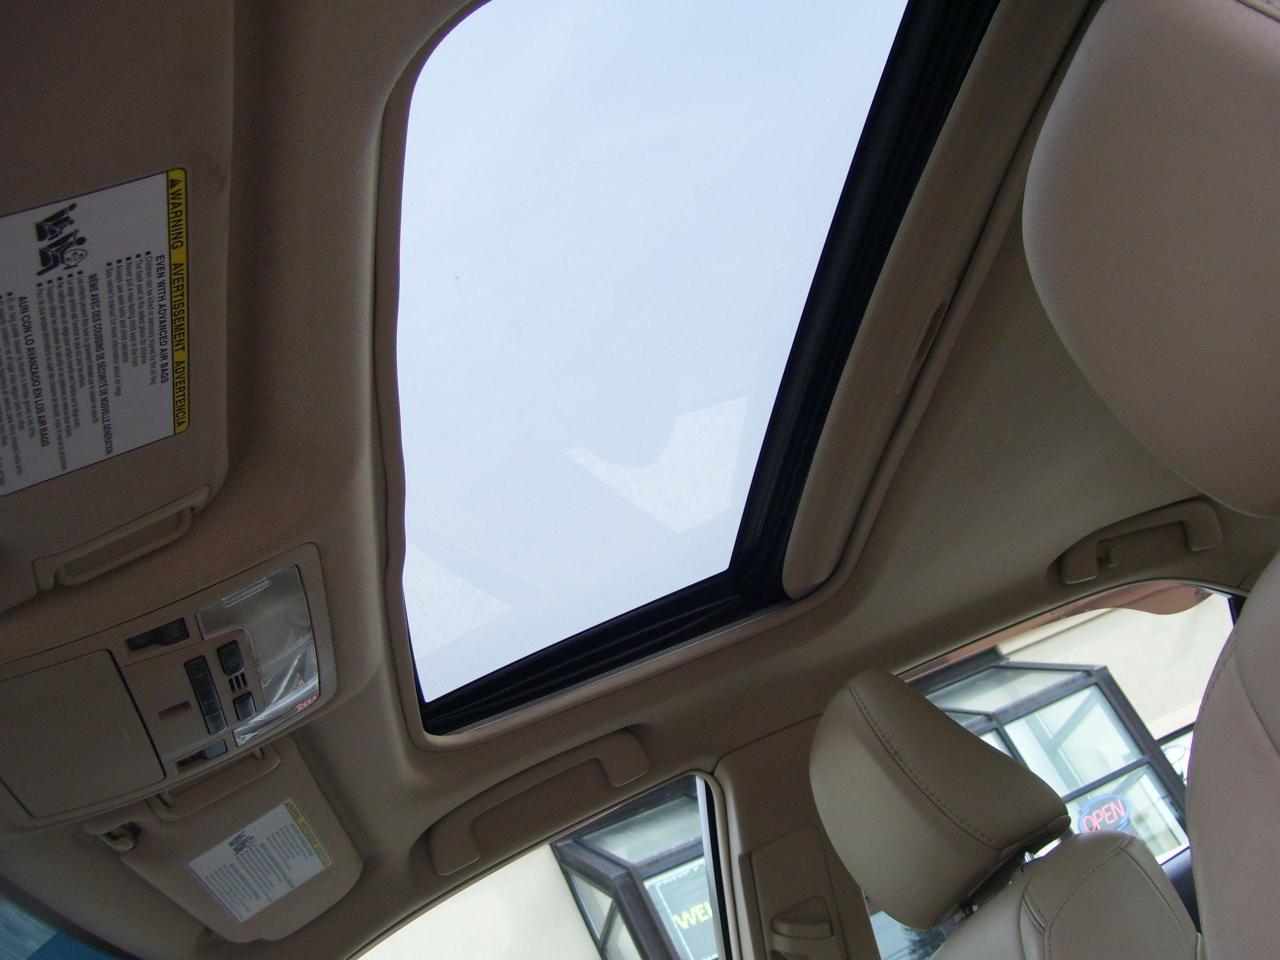 2012 Toyota Camry XLE,V6,GPS,Leather,Sunroof,Backup Camera,Certified - Photo #12